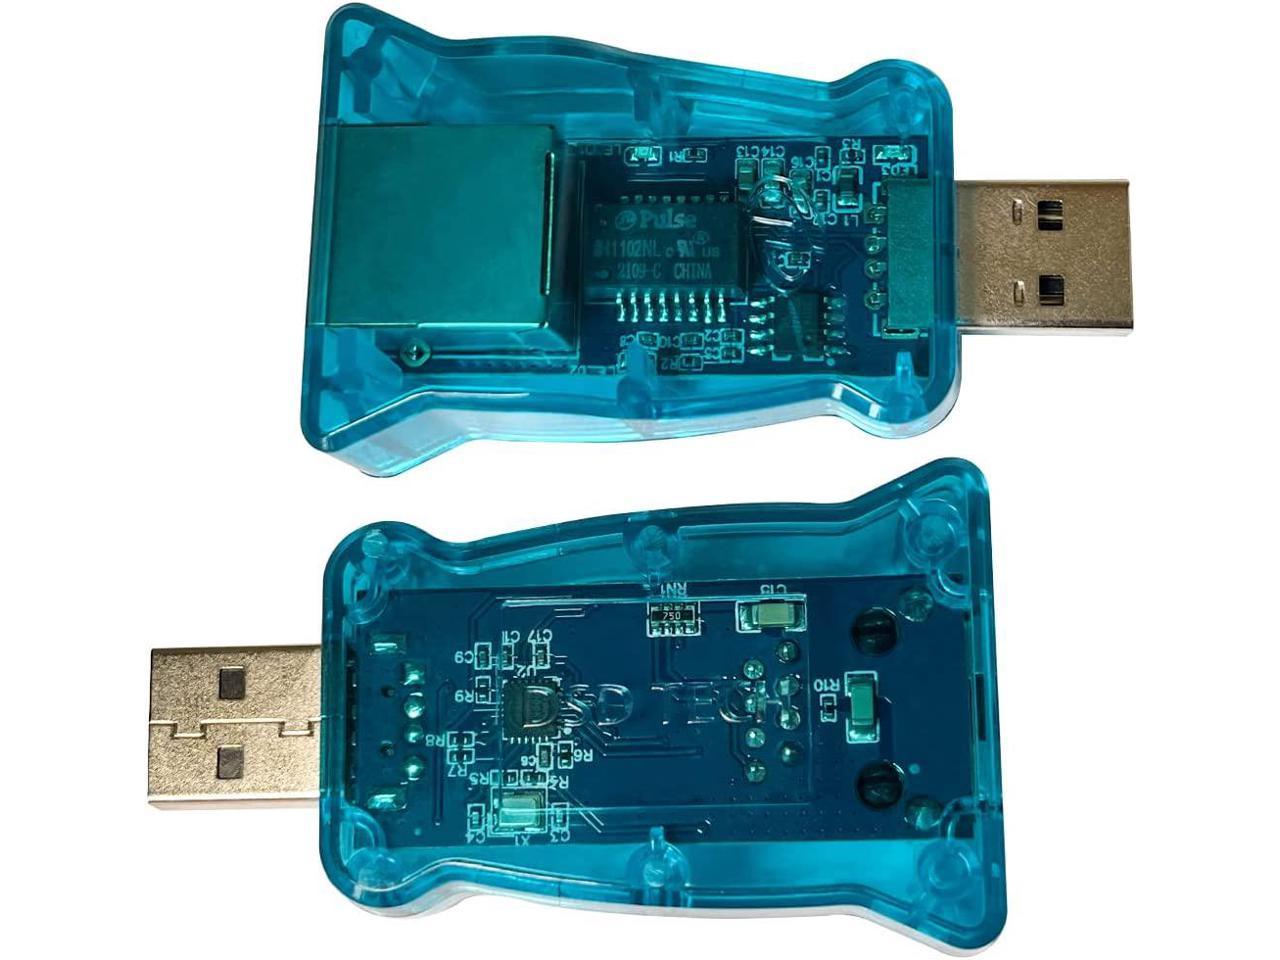 DSD TECH SH-N01A USB to Ethernet RJ45 Adapter 10M/100M for Desktop Laptop